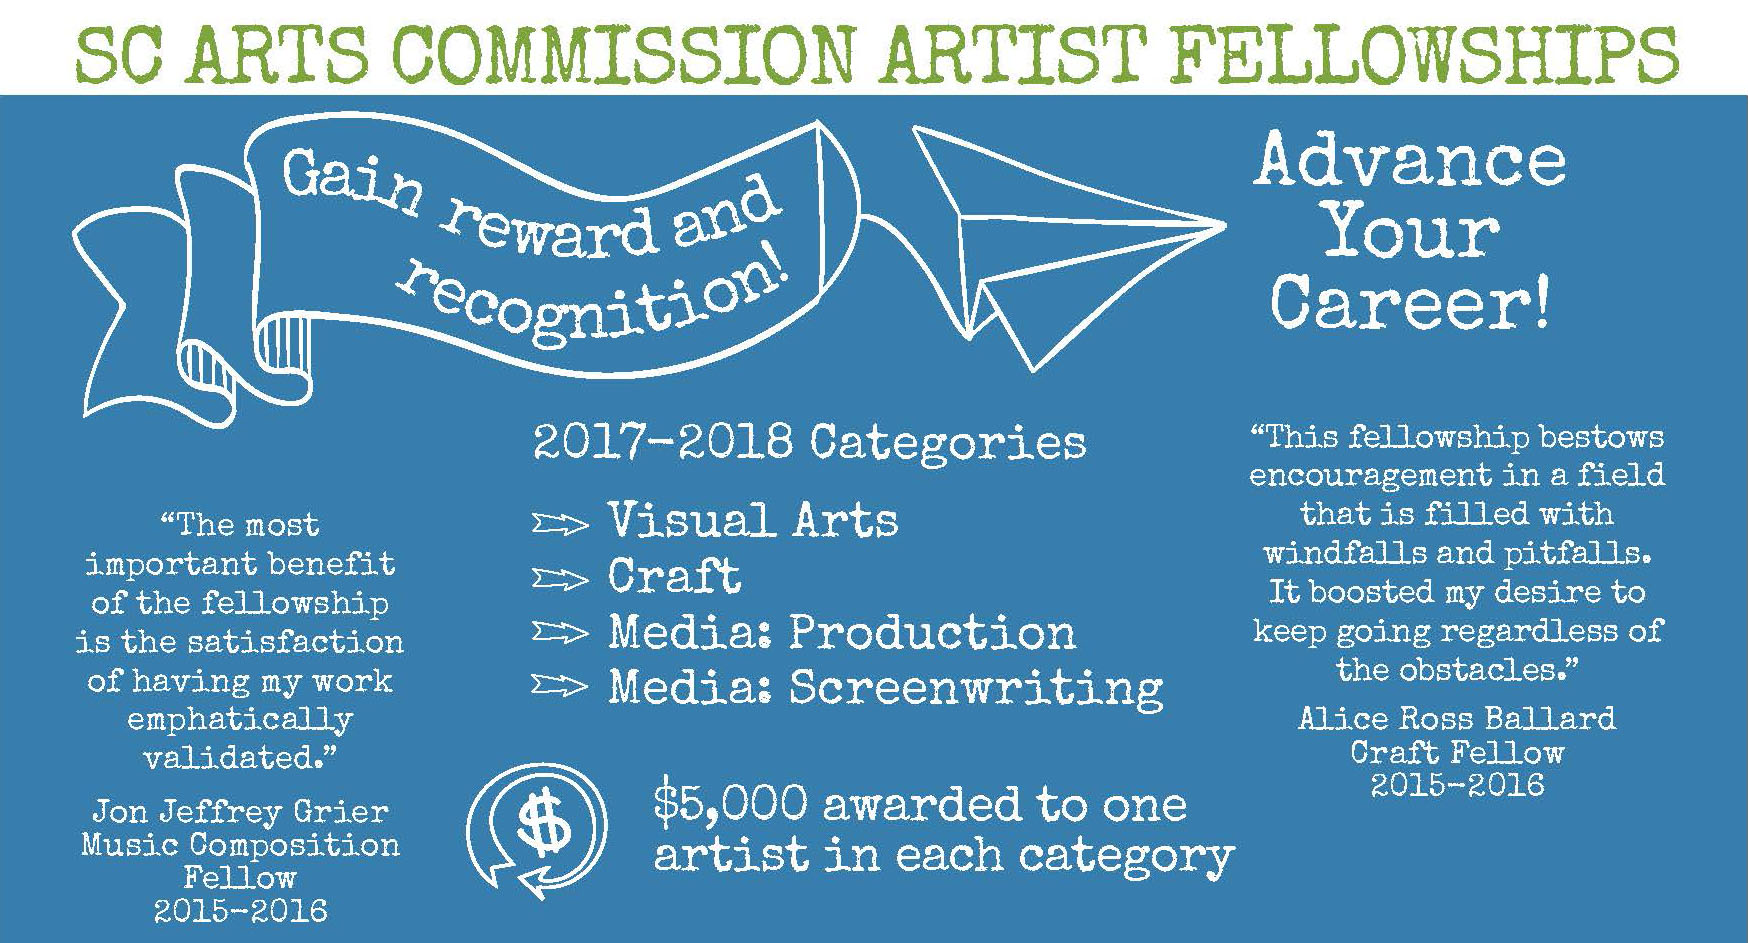 Fellowships for visual arts, craft, media production and screenwriting